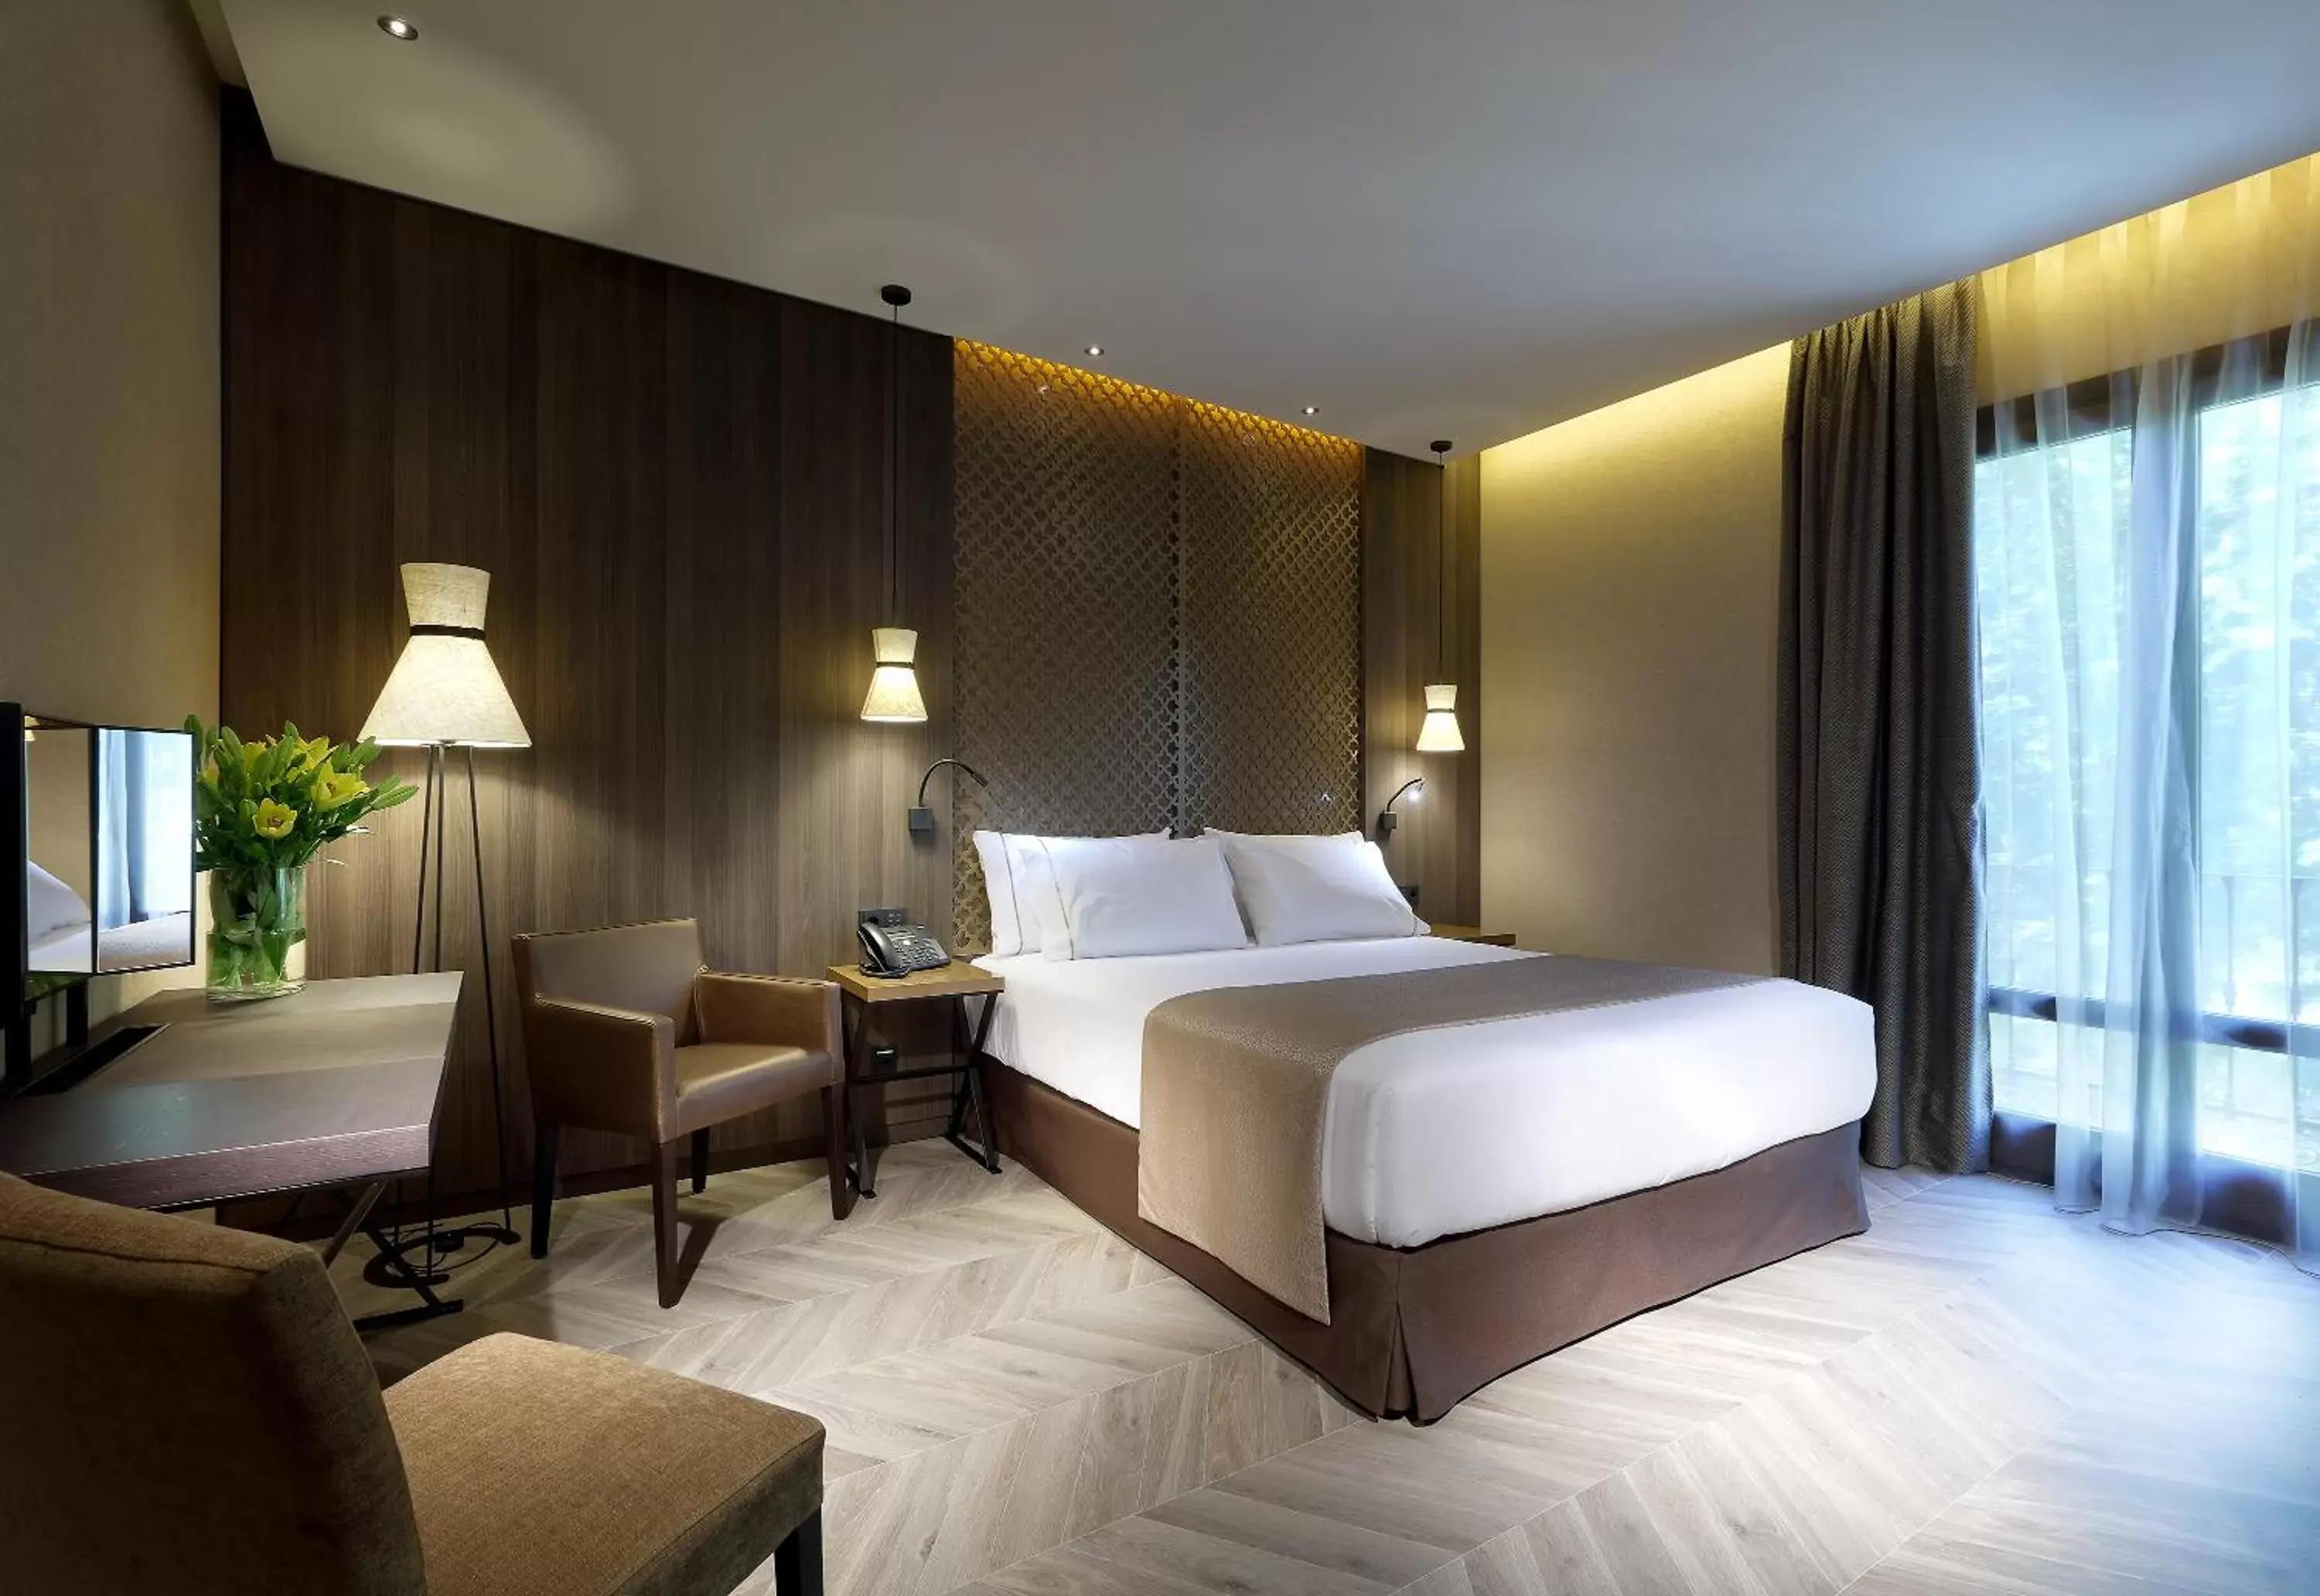 Bed, Room Photo in Áurea Washington Irving by Eurostars Hotel Company